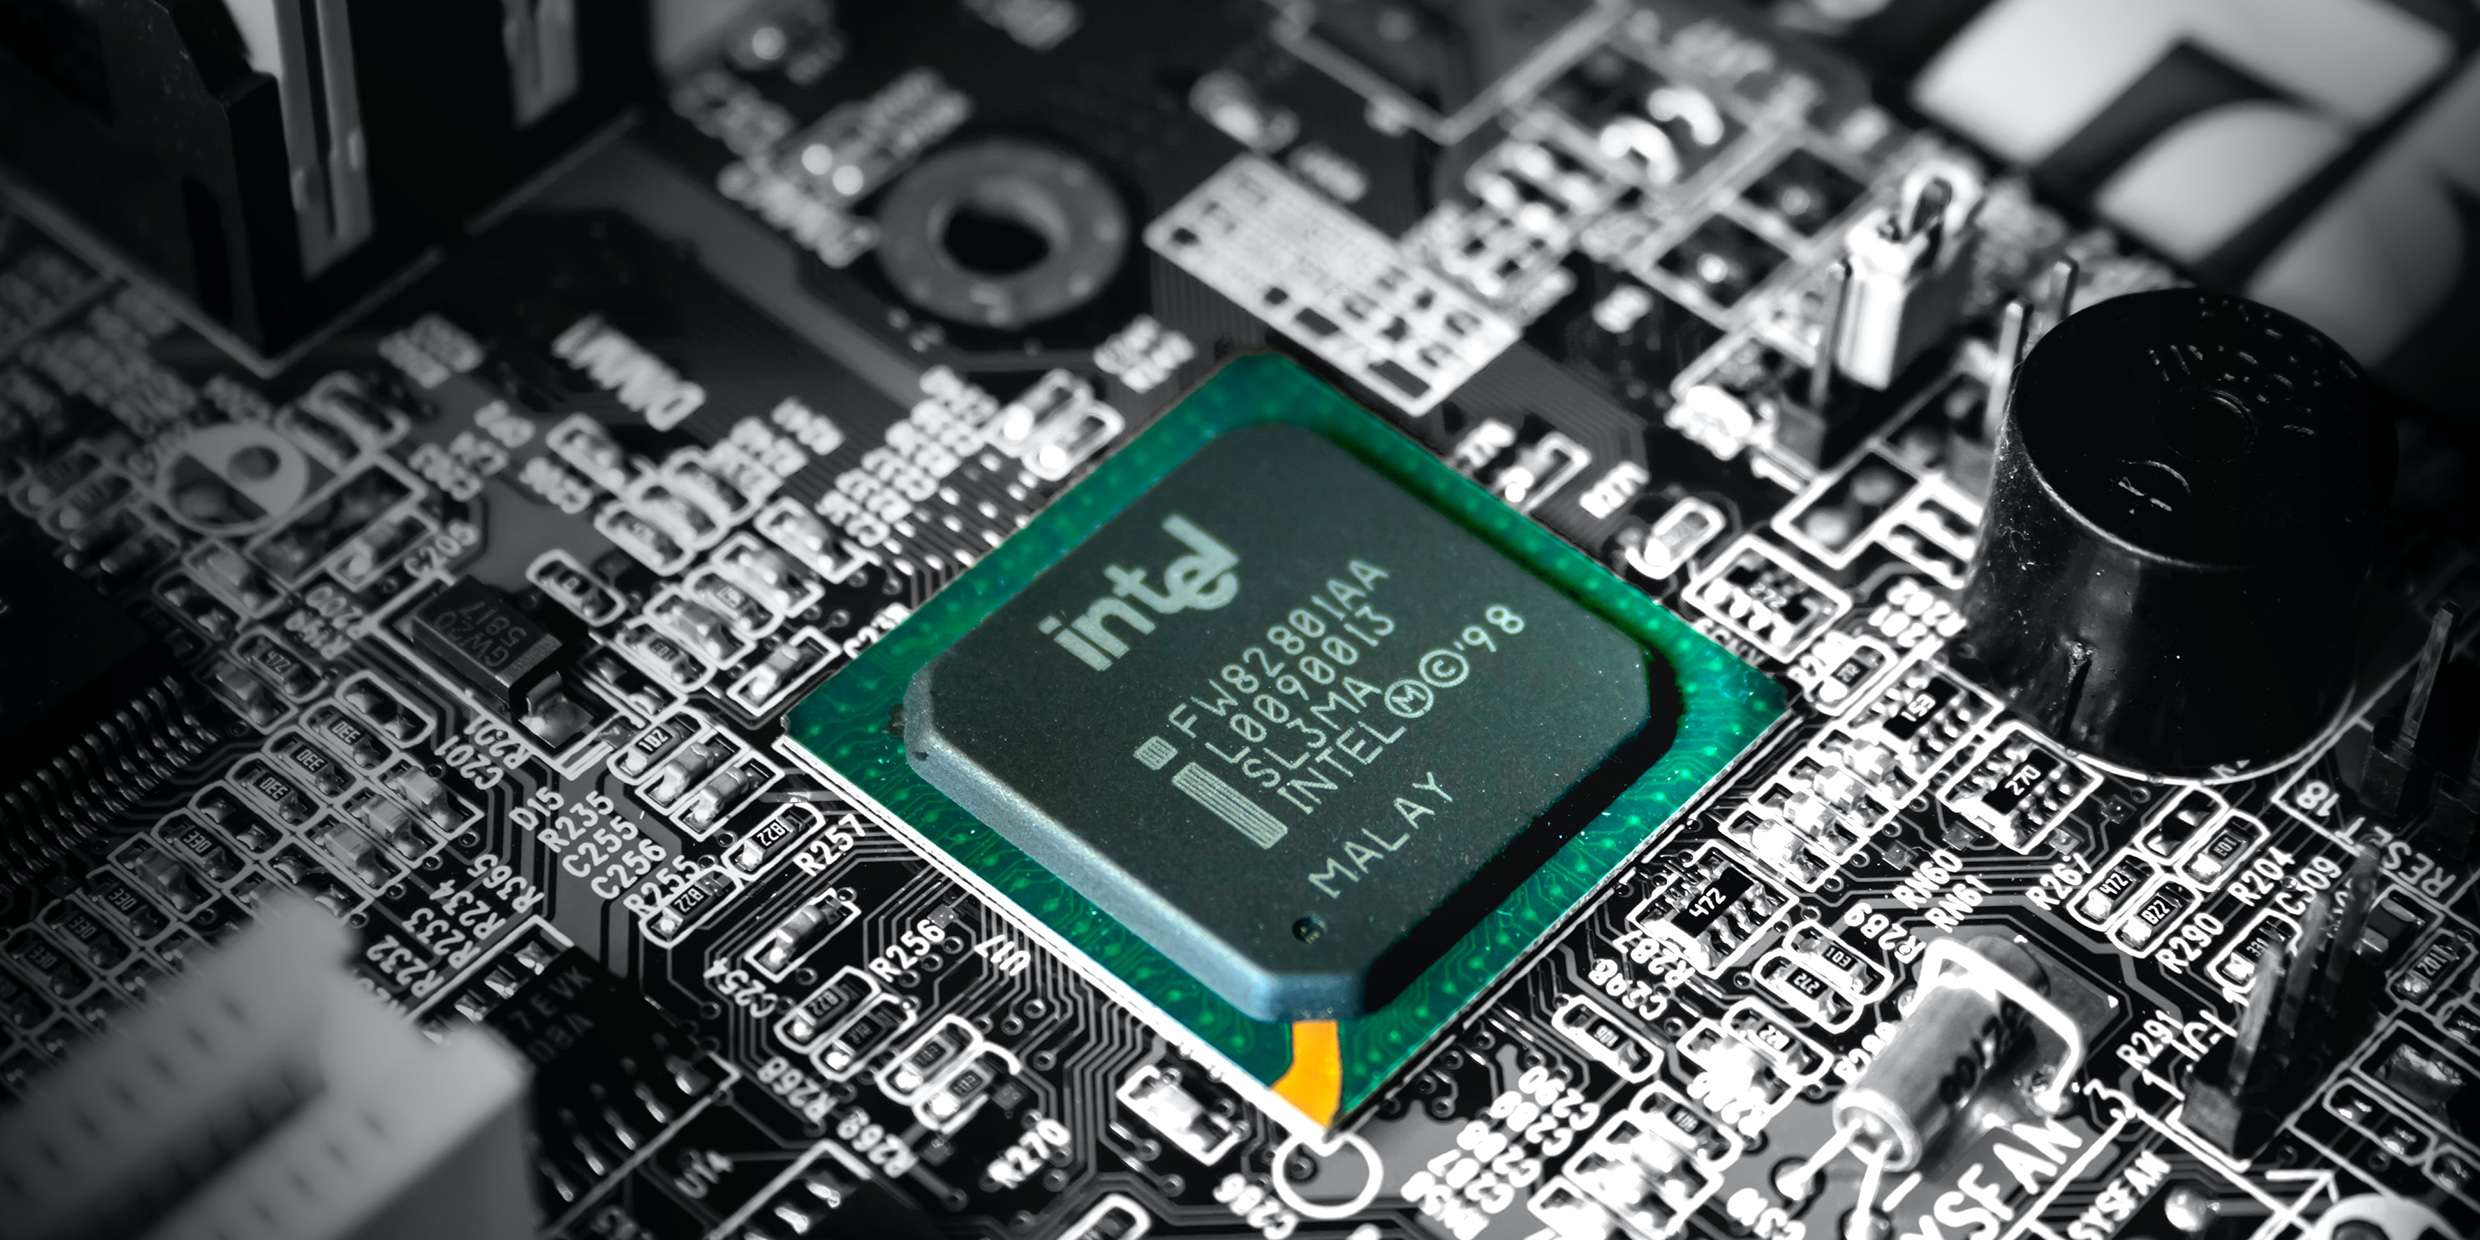 Closeup image of a Intel processor on a computer motherboard